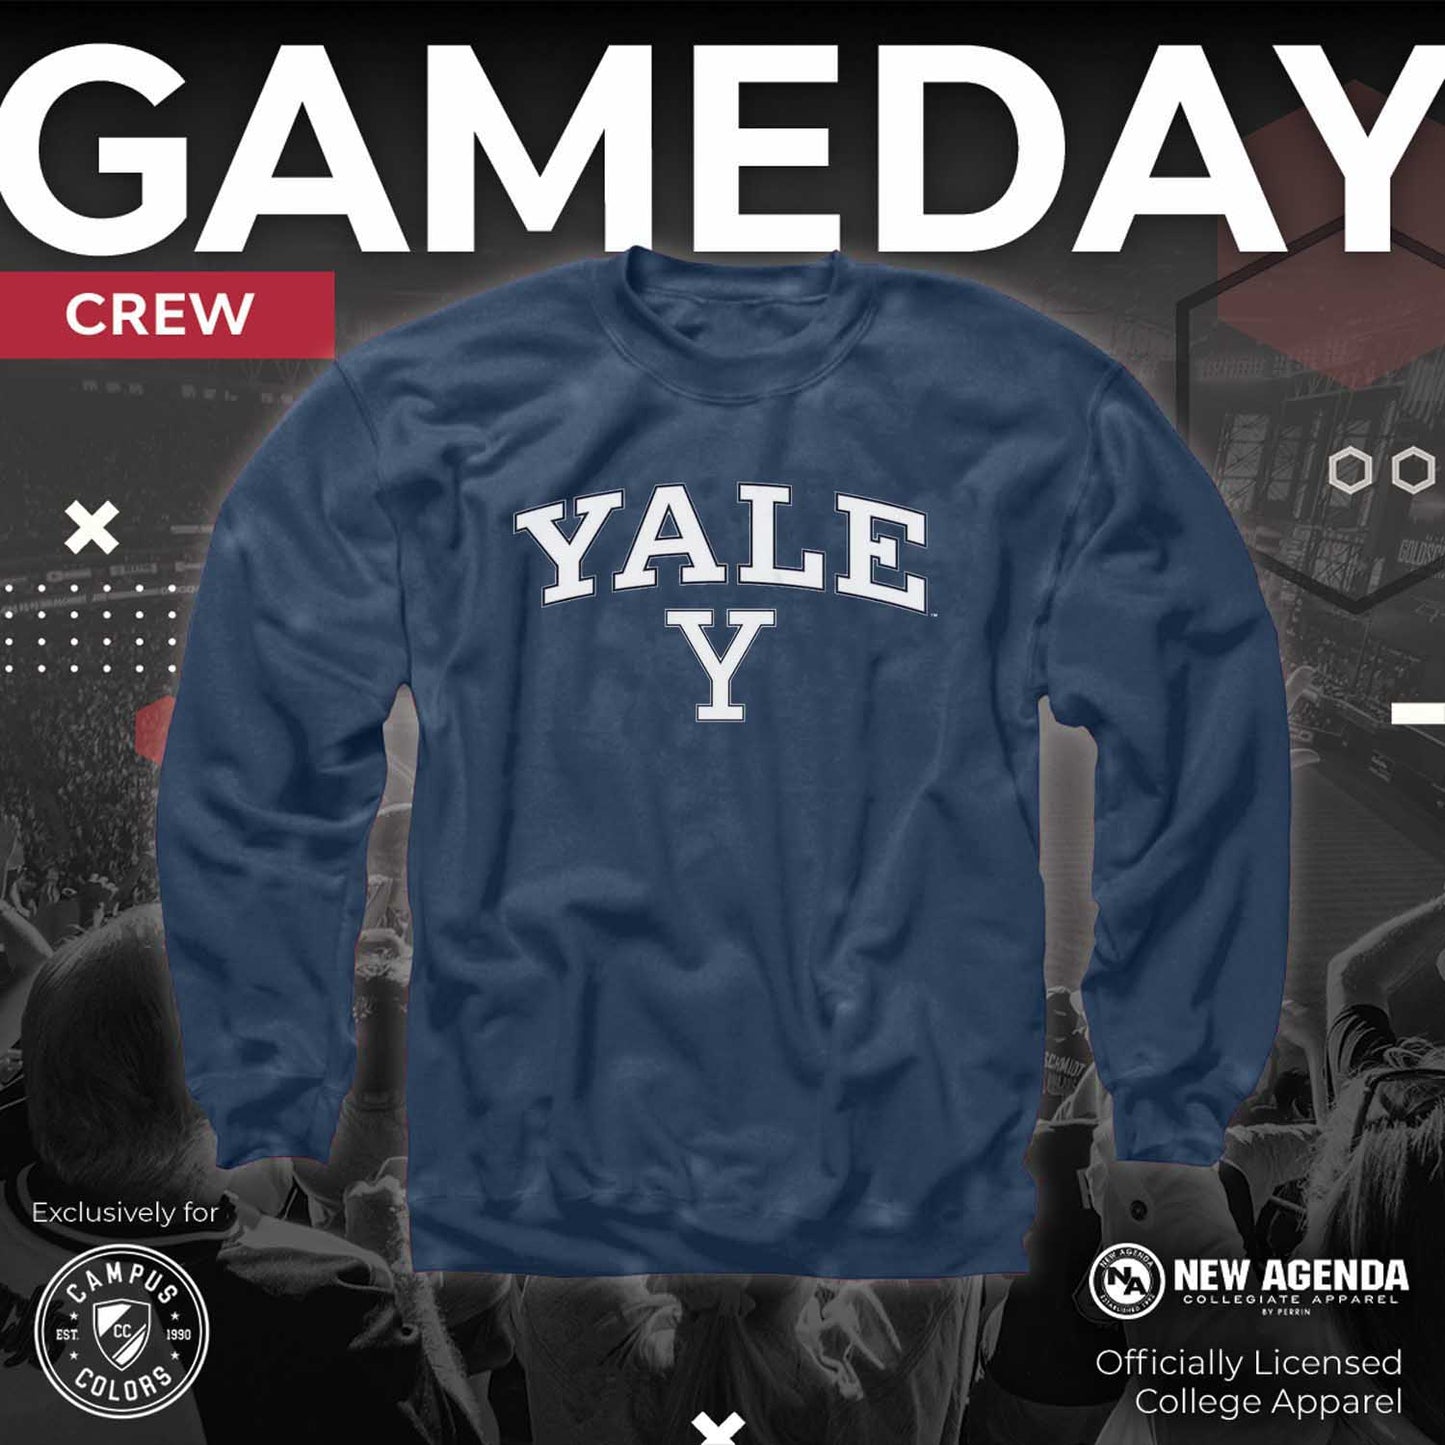 Yale Bulldogs Campus Colors Adult Arch & Logo Soft Style Gameday Crewneck Sweatshirt  - Navy